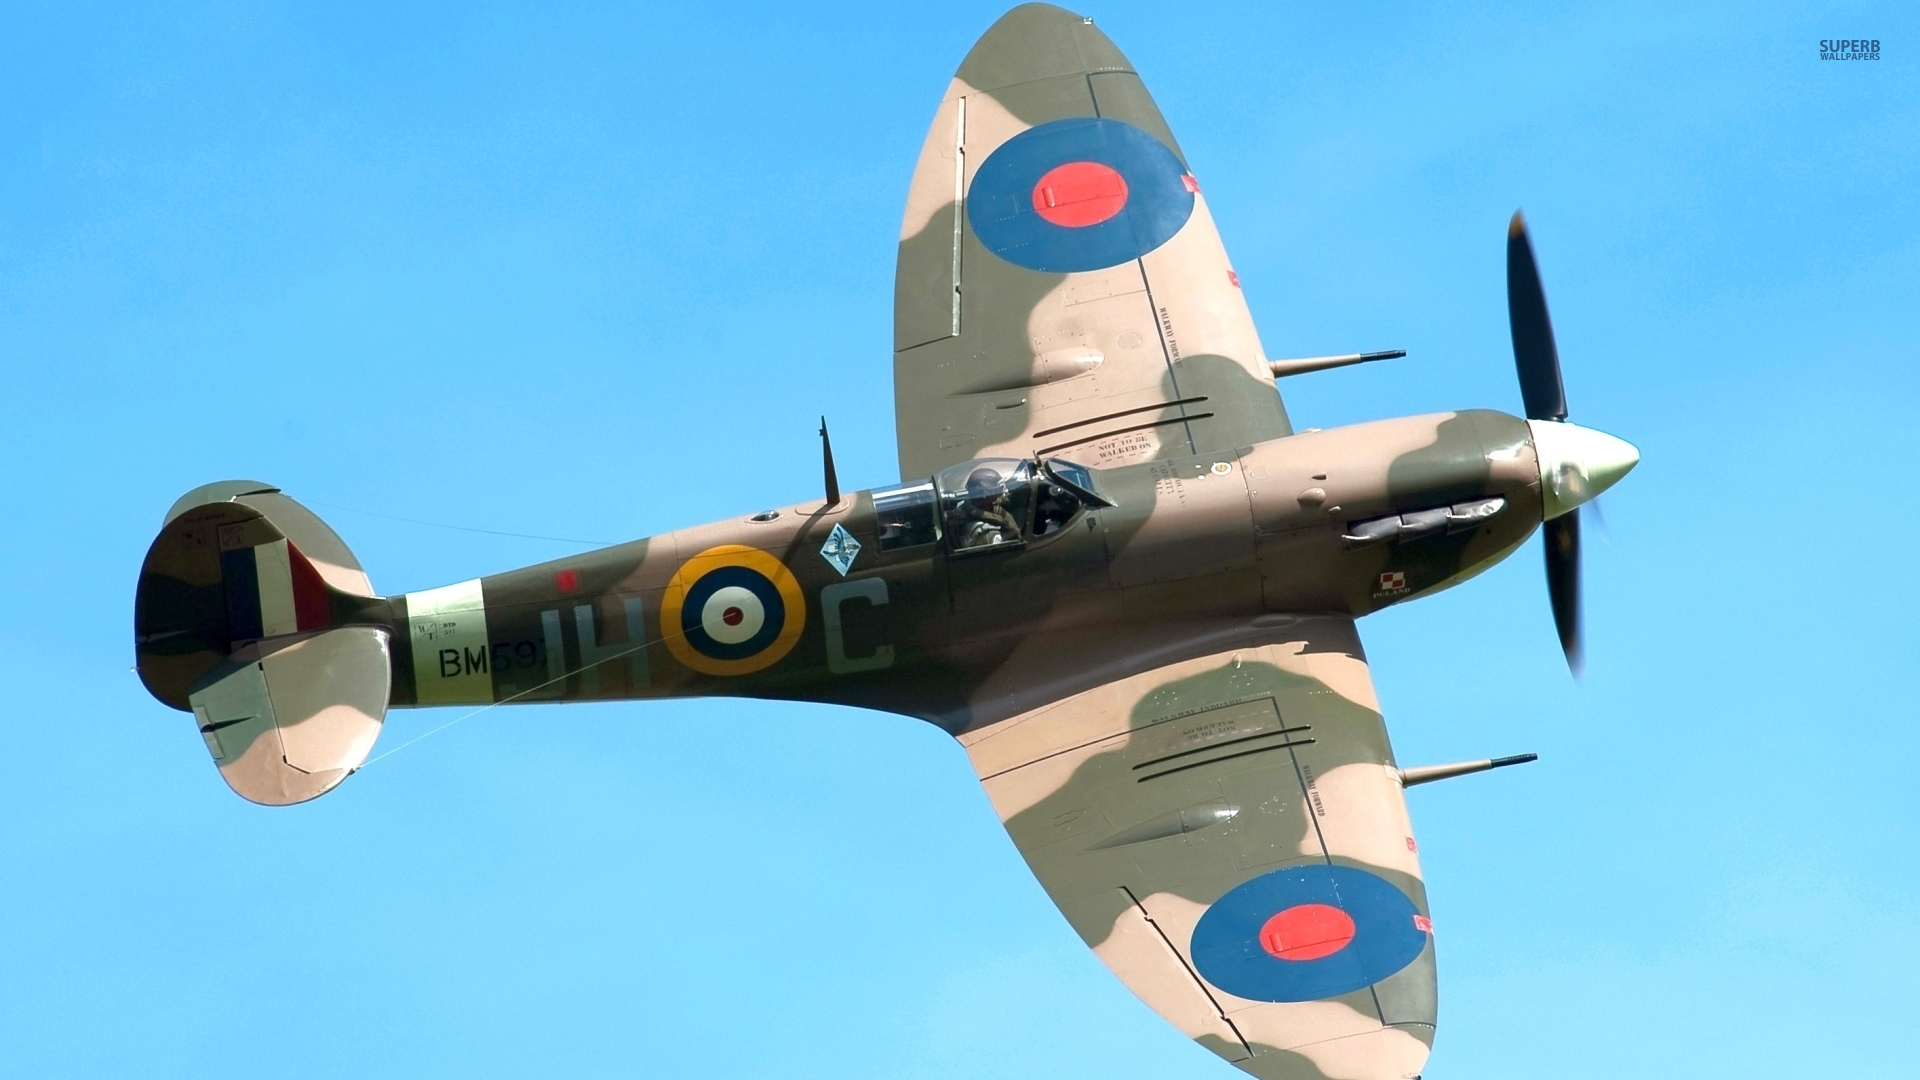 Supermarine Spitfire wallpaper - Aircraft wallpapers -